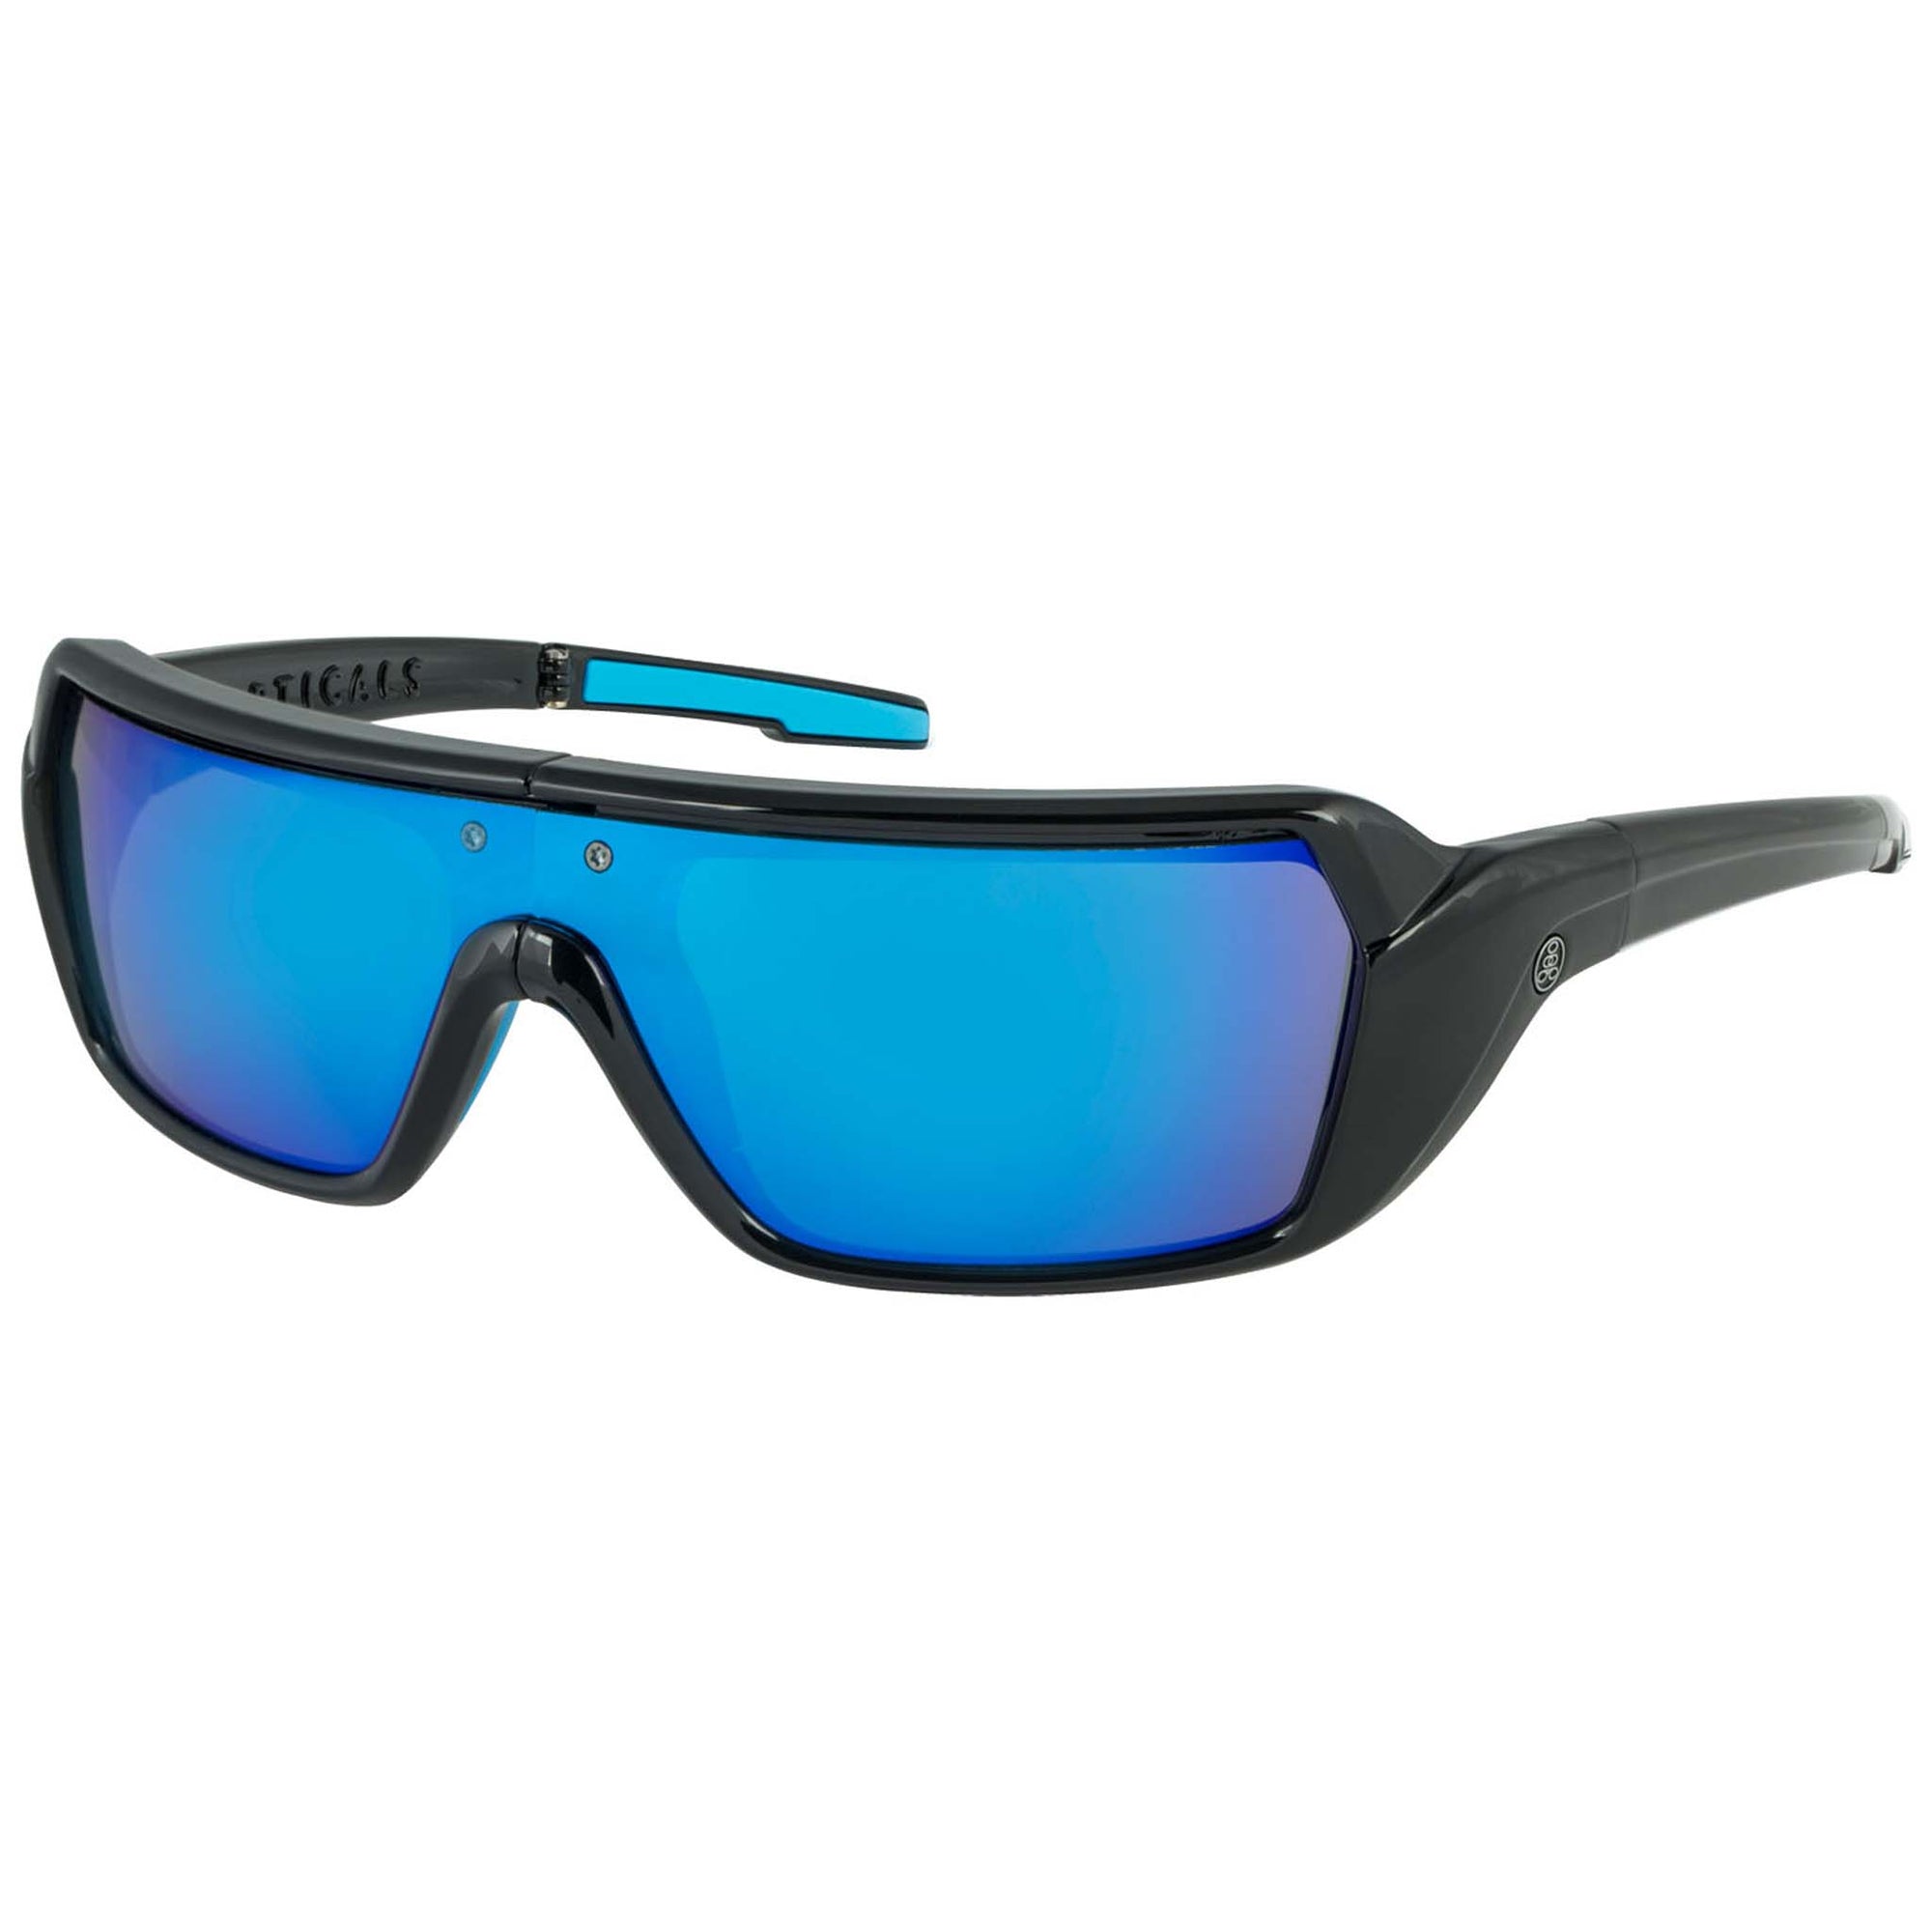 Popticals, Premium Compact Sunglasses, PopStorm, 010060-BGUO, Standard Sunglasses, Gloss Black Frame, Gray Lenses w/Blue Mirror Finish, Glam View